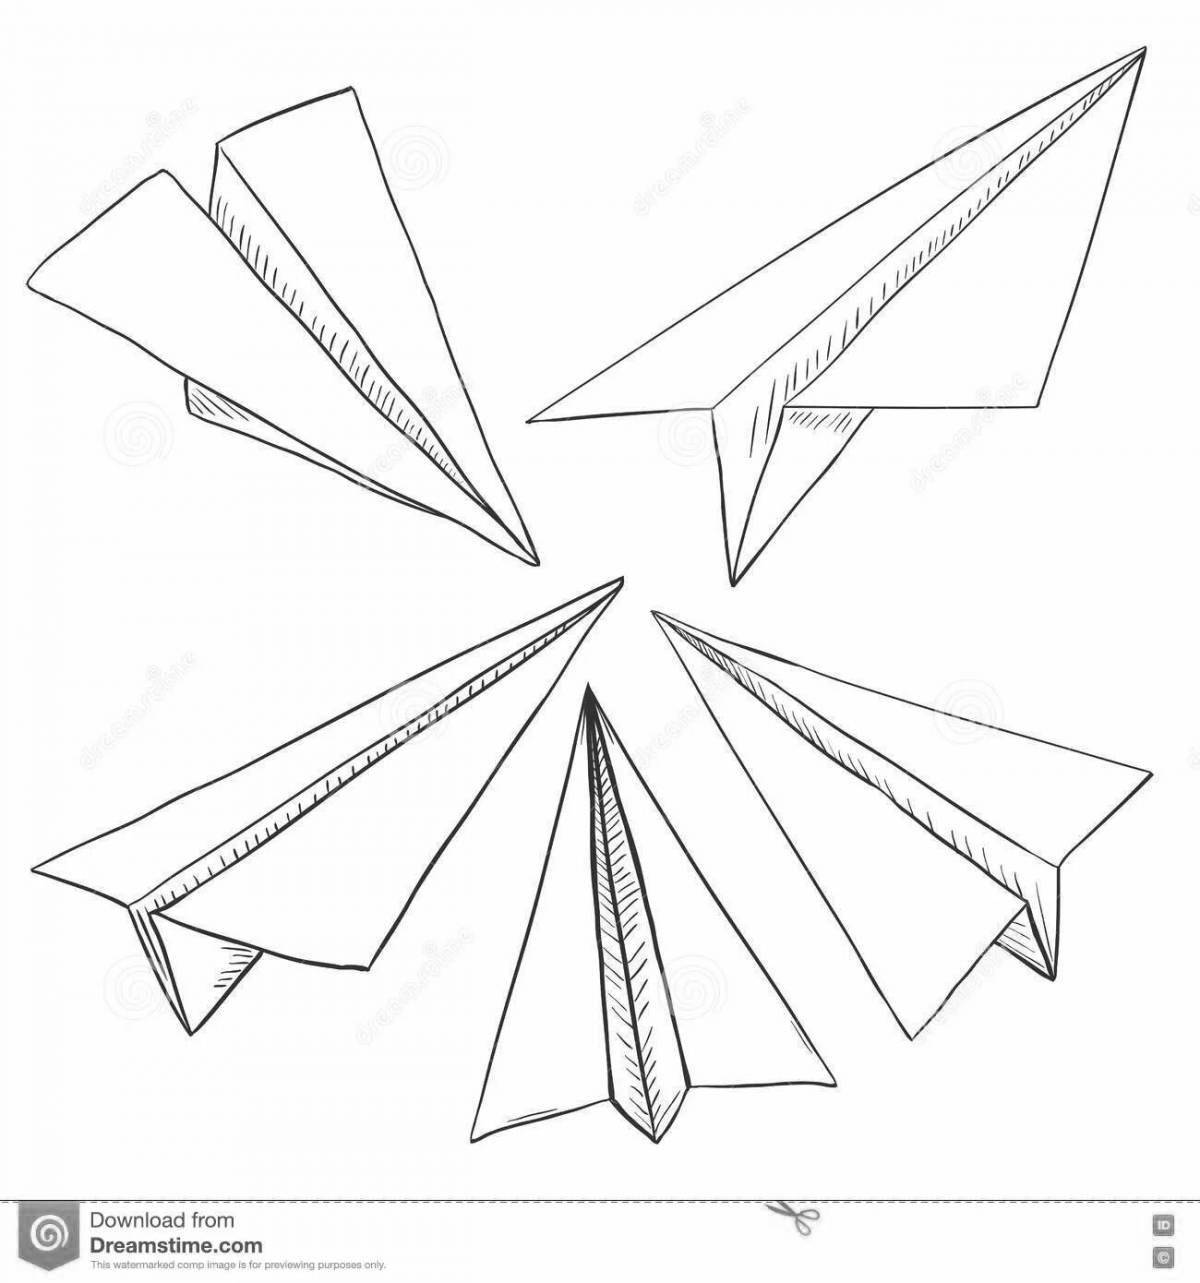 Бумажный самолетик эскиз